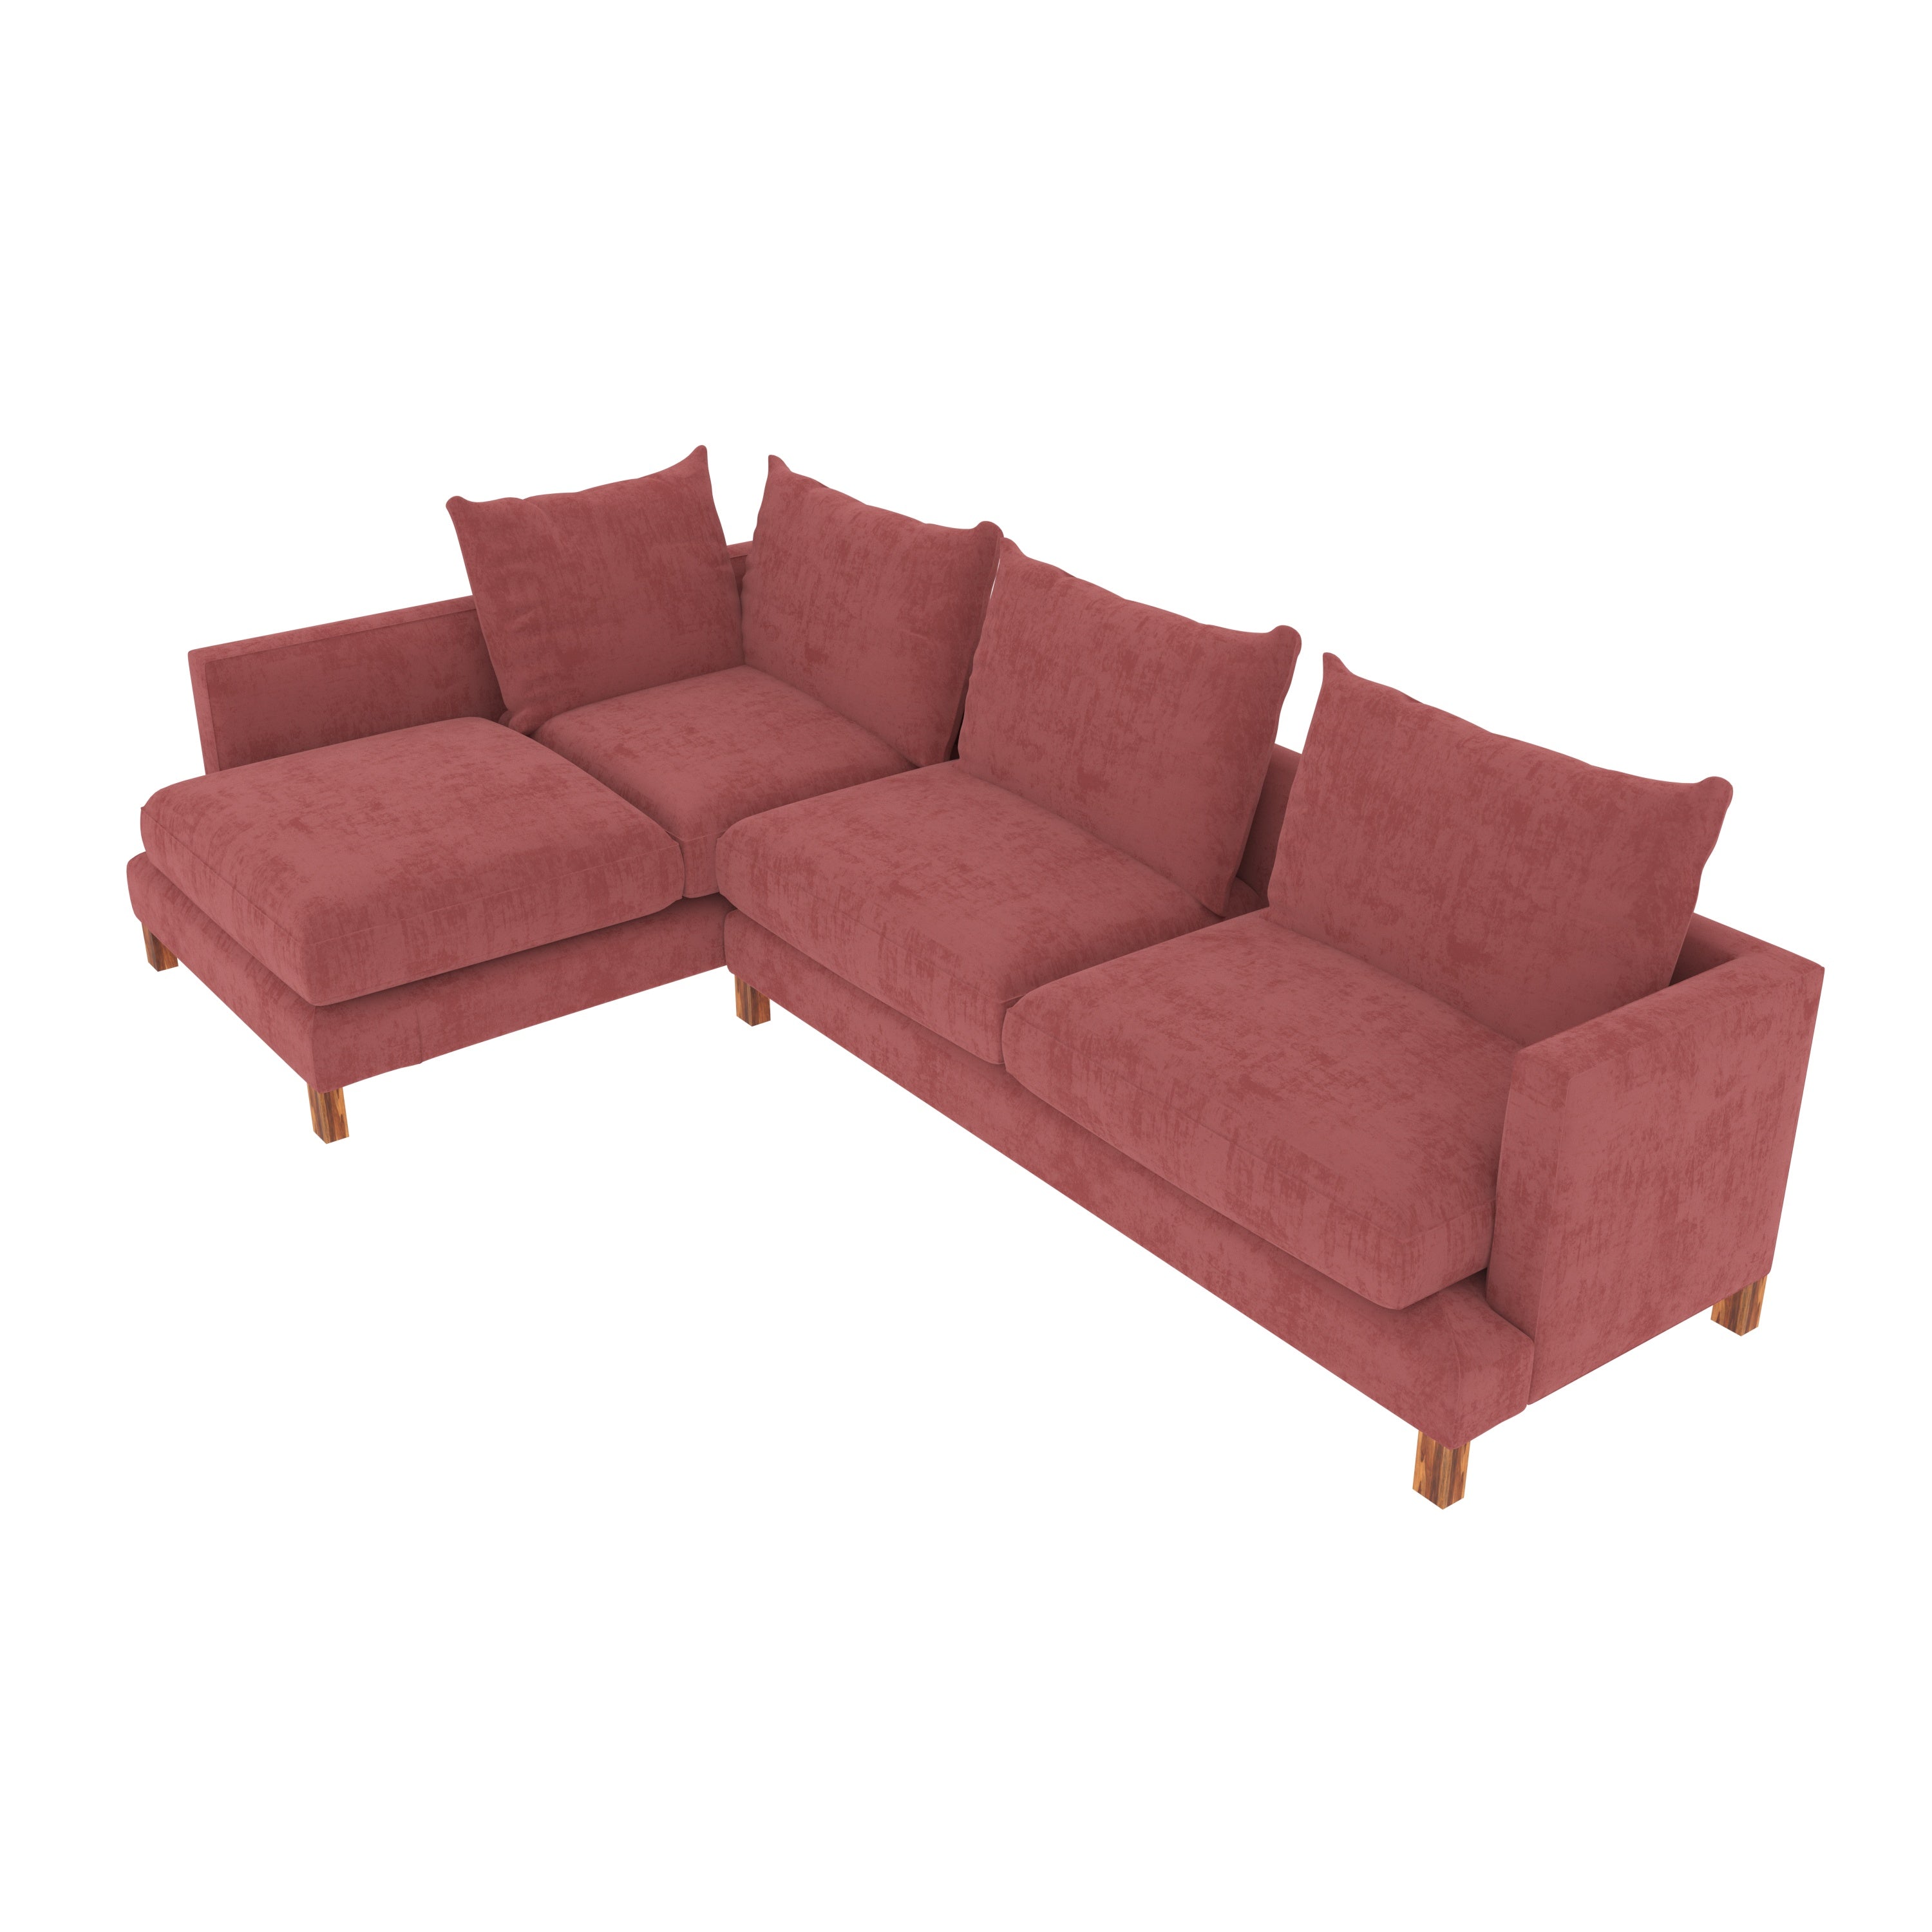 Premium Pink Pastel Coloured with Premium Comfort L Shaped 4 Seater Sofa Set for Home Sofa